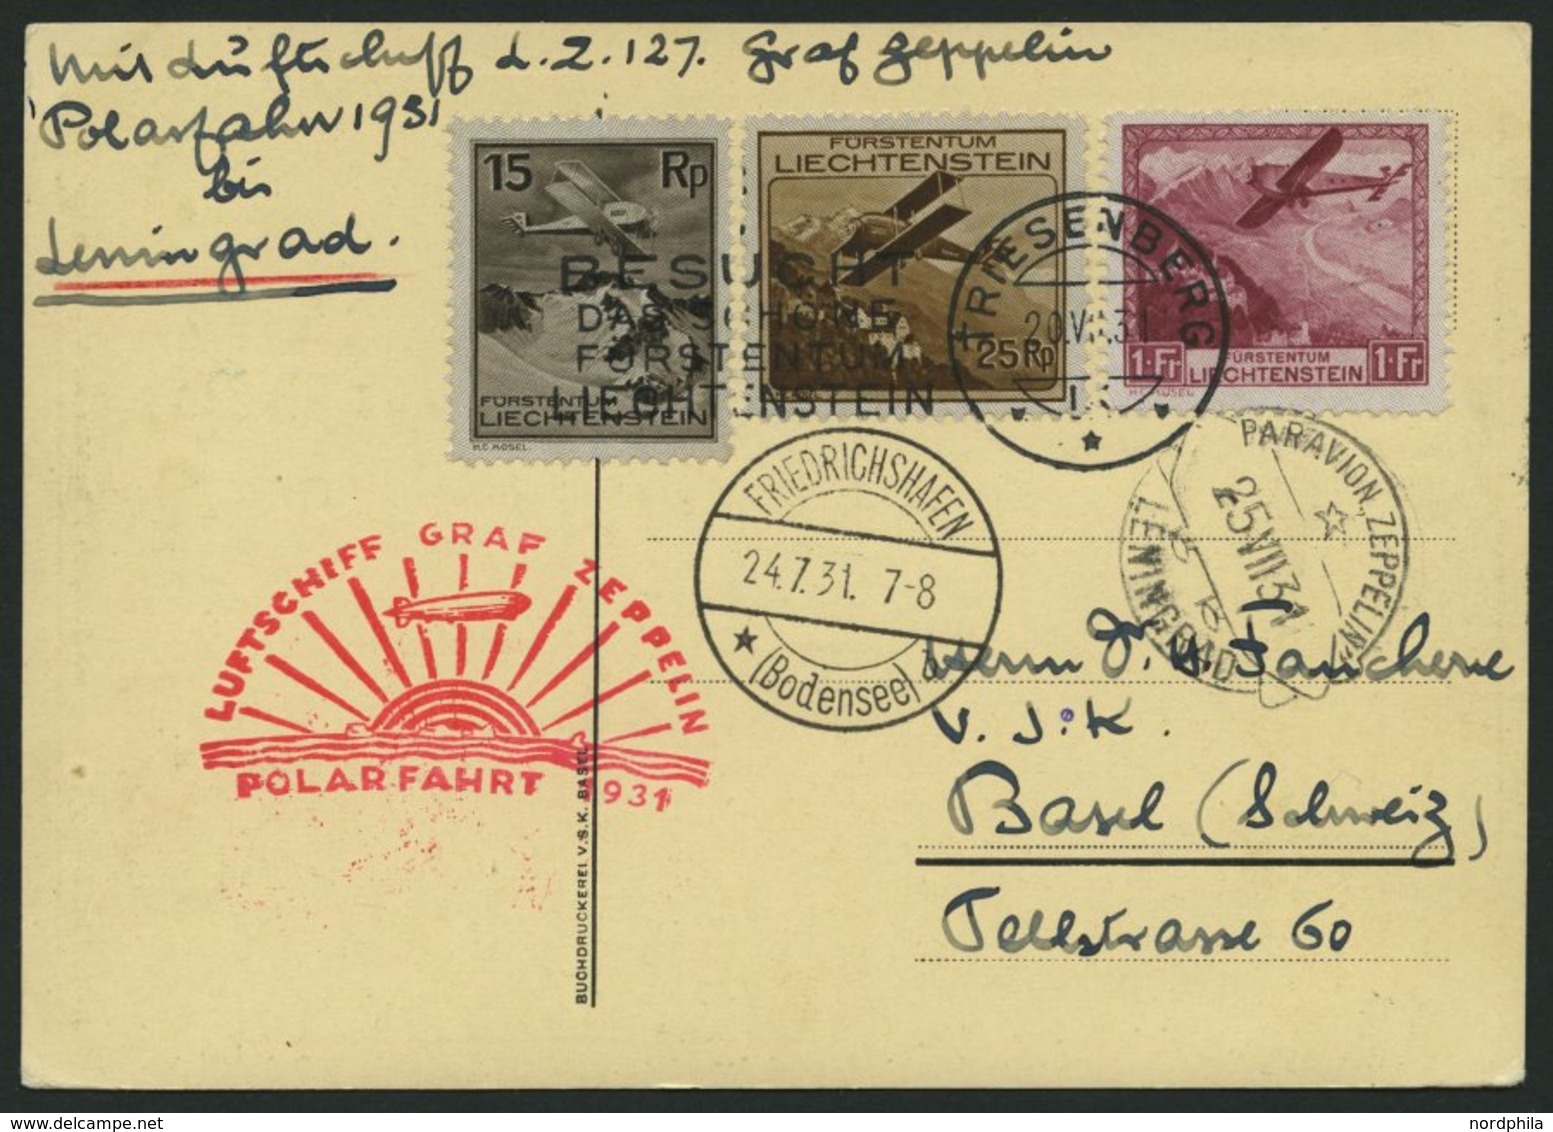 ZULEITUNGSPOST 119E BRIEF, Liechtenstein: 1931, Polarfahrt, Abgabe Leningrad, Prachtkarte - Airmail & Zeppelin